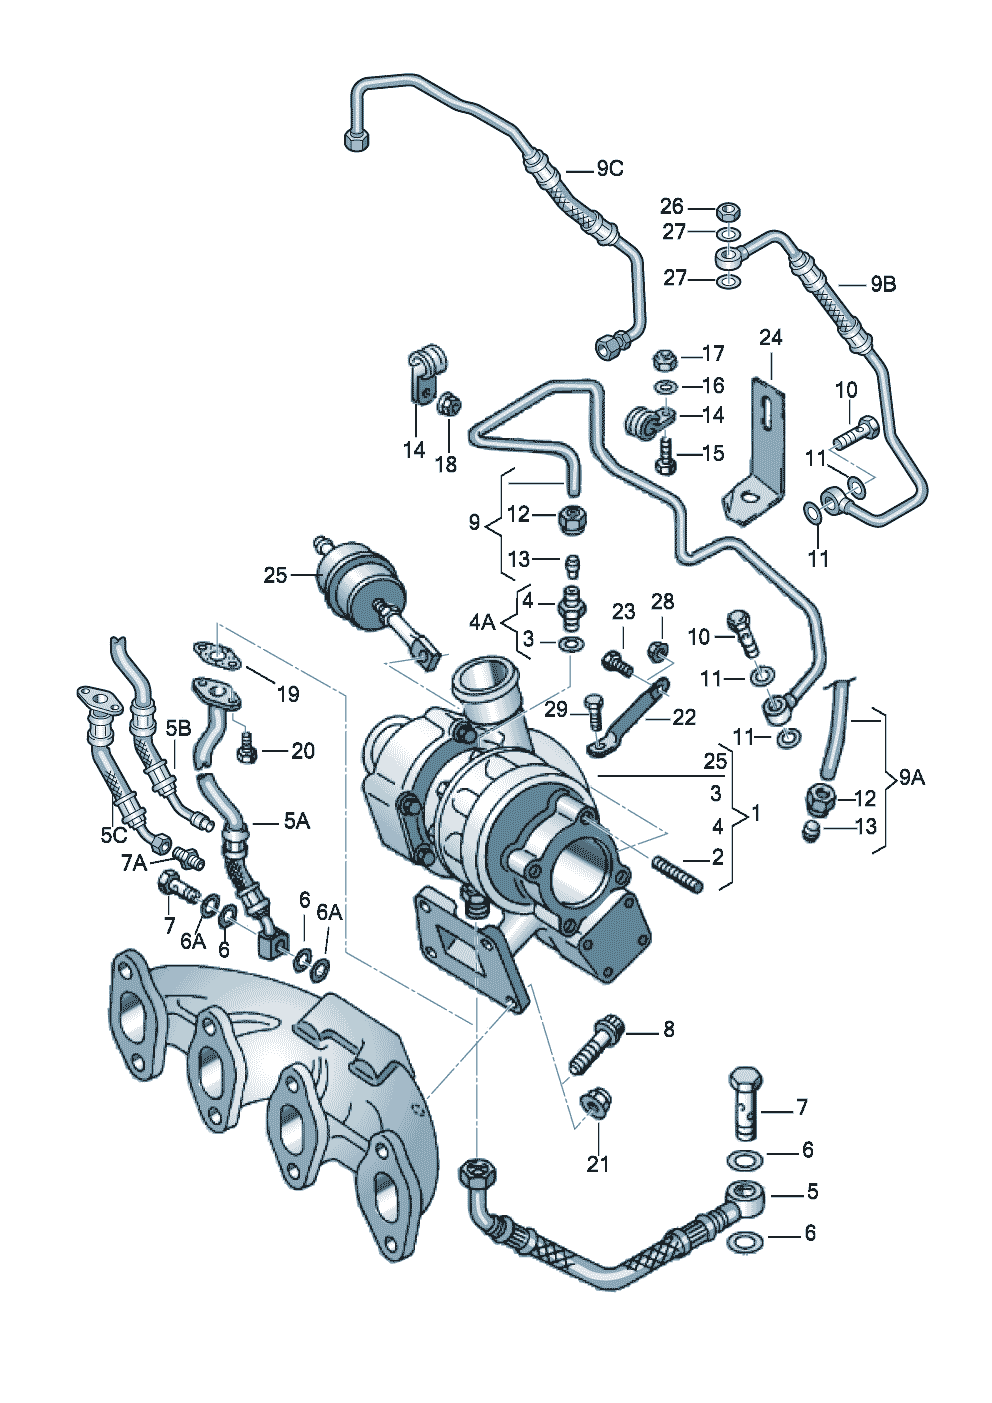 Exhaust gas turbocharger 1.9ltr. - Audi Cabriolet - aca